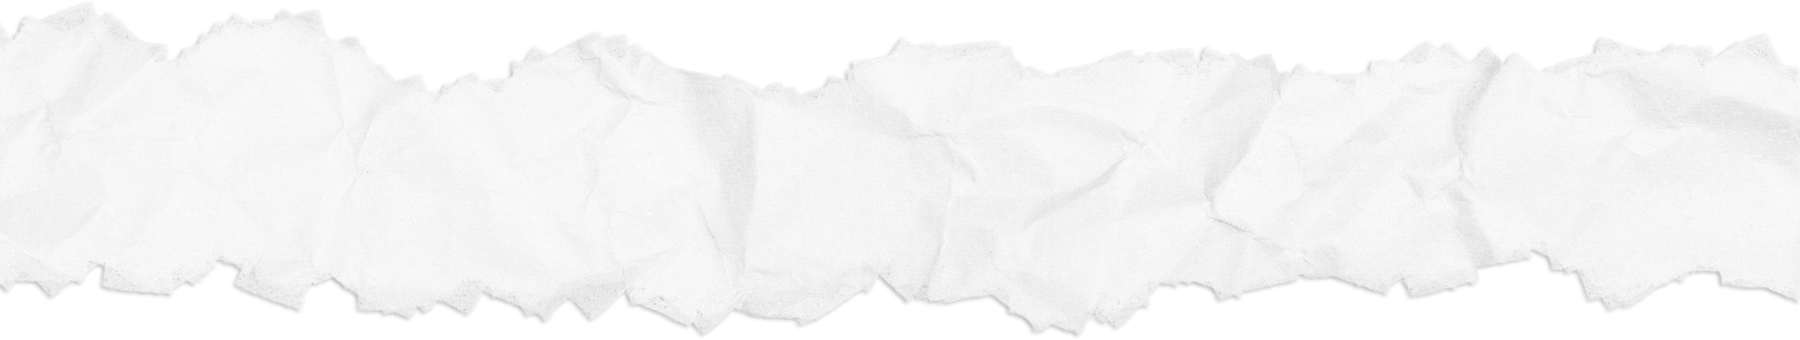 Crumpled Torn White Paper